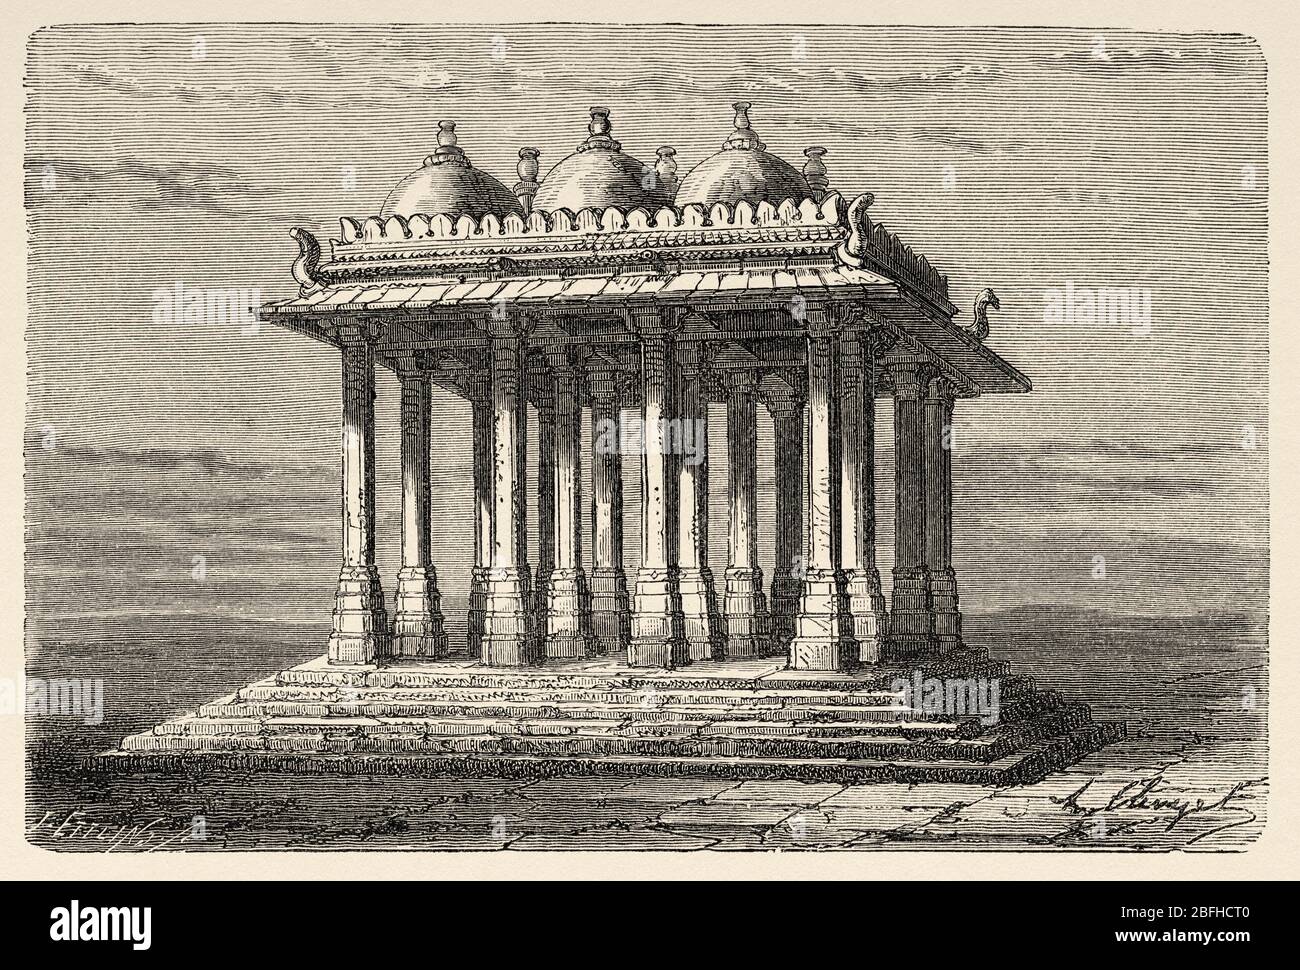 Baradari, sixteen-pillared structure. Sarkhej Roza, Ahmedabad, Gujarat India. Old engraving illustration from El Mundo en la Mano 1878 Stock Photo